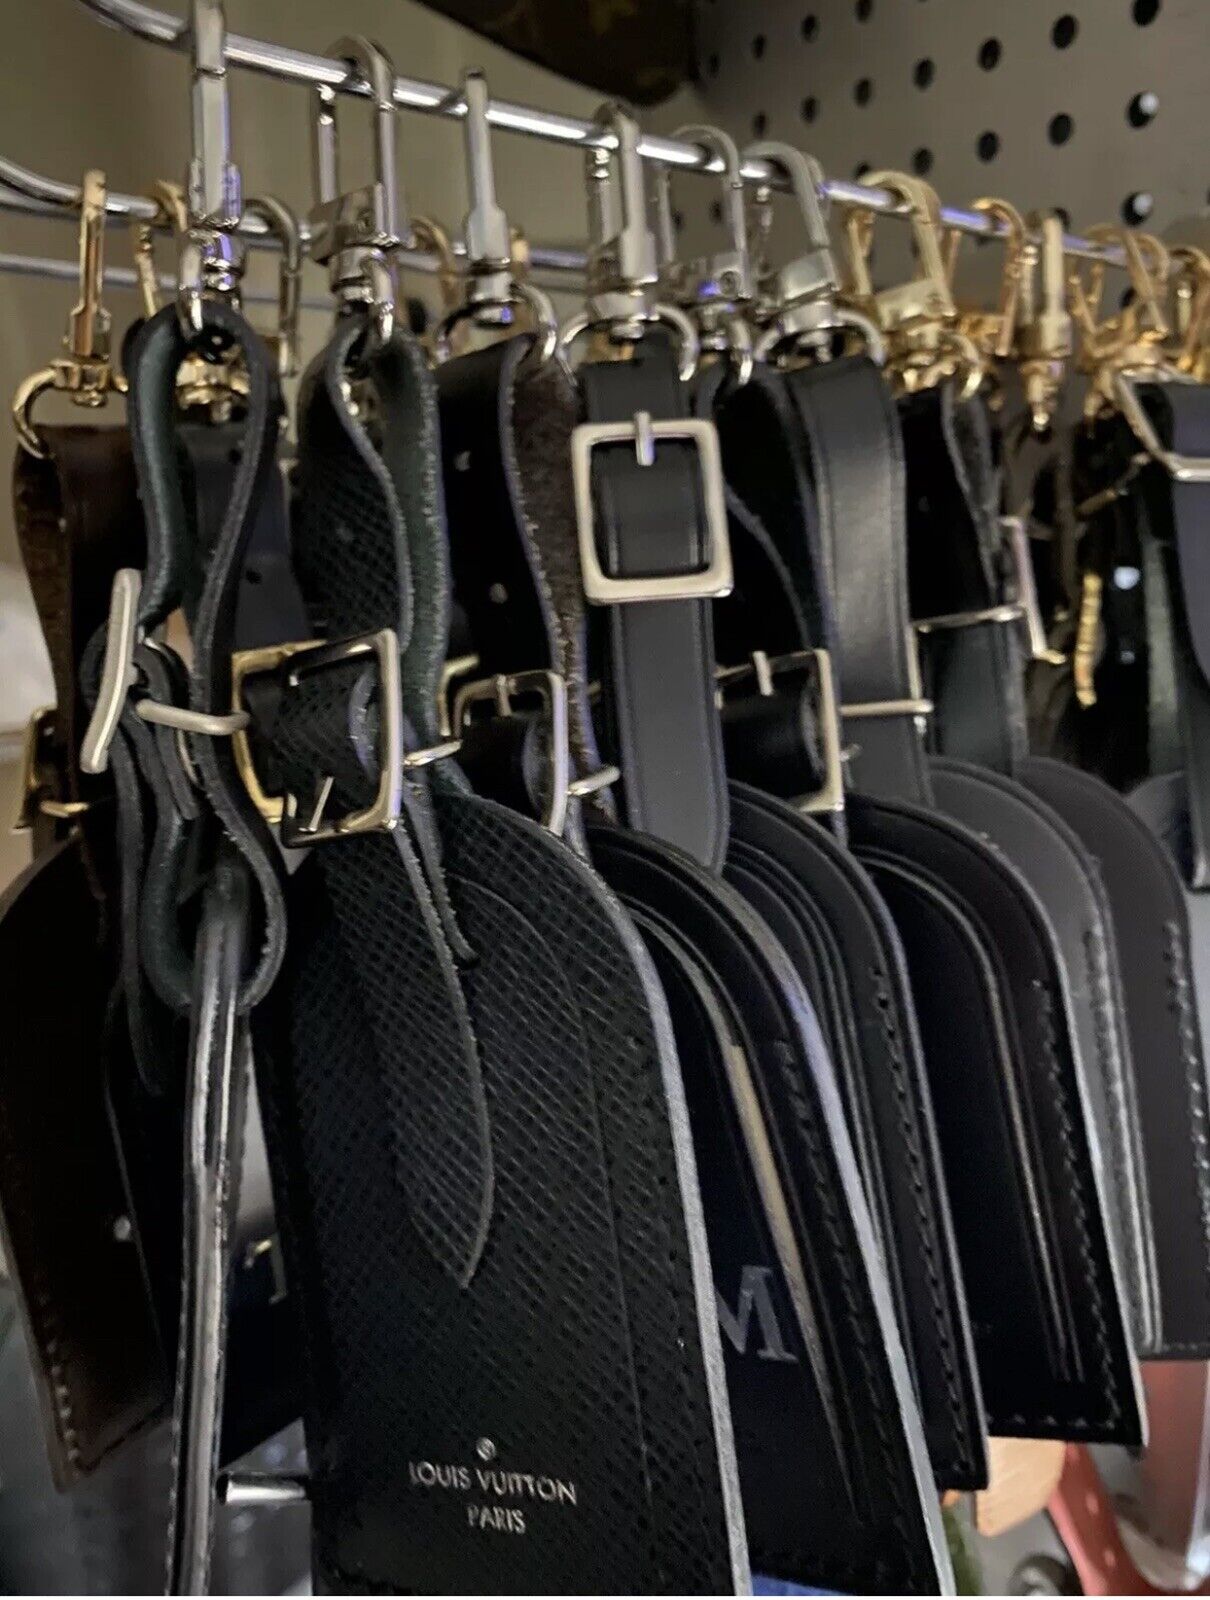 Louis Vuitton Black Leather Tag w/ HM Initials Silvertone Calfskin